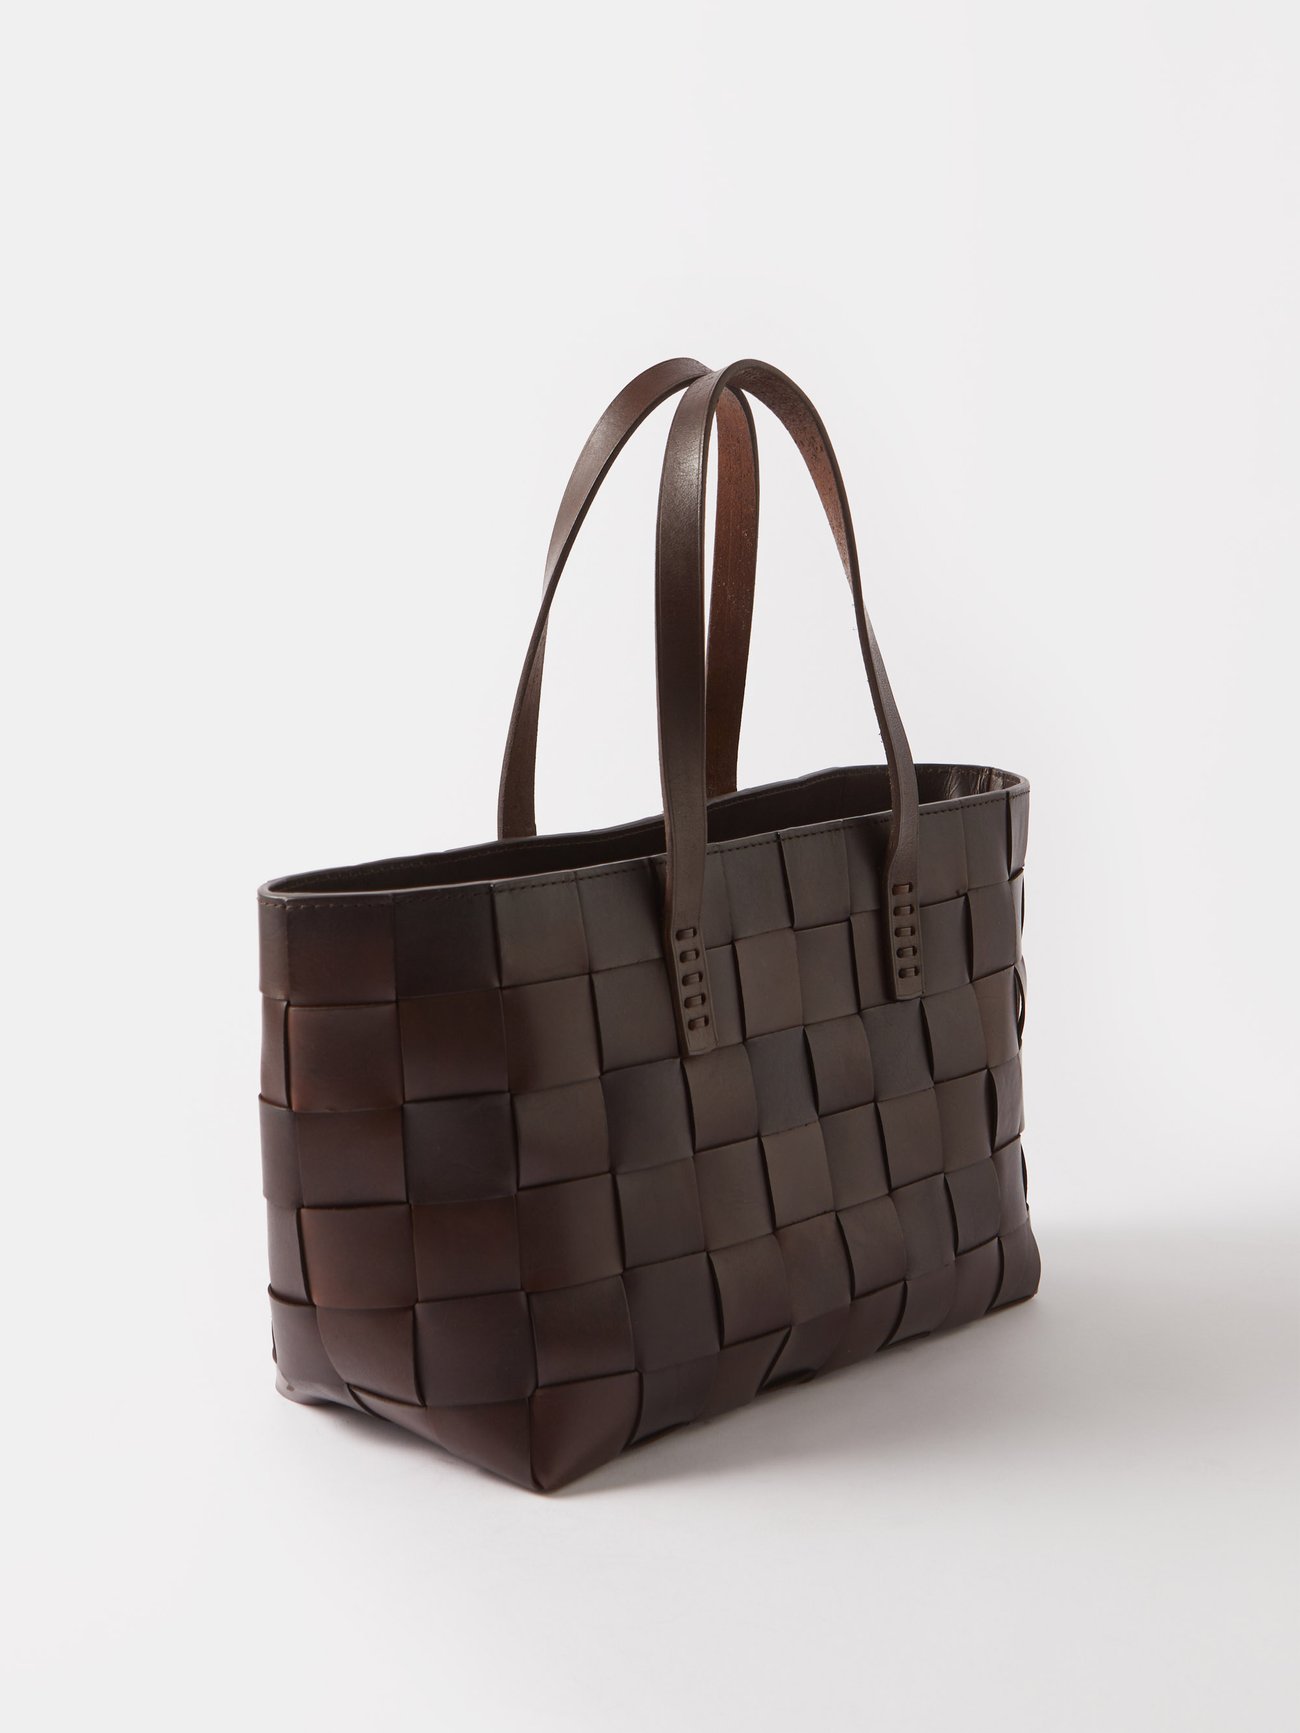 Dragon Diffusion - Japan Tote w/ woven handles Bordo Woven Leather Bag